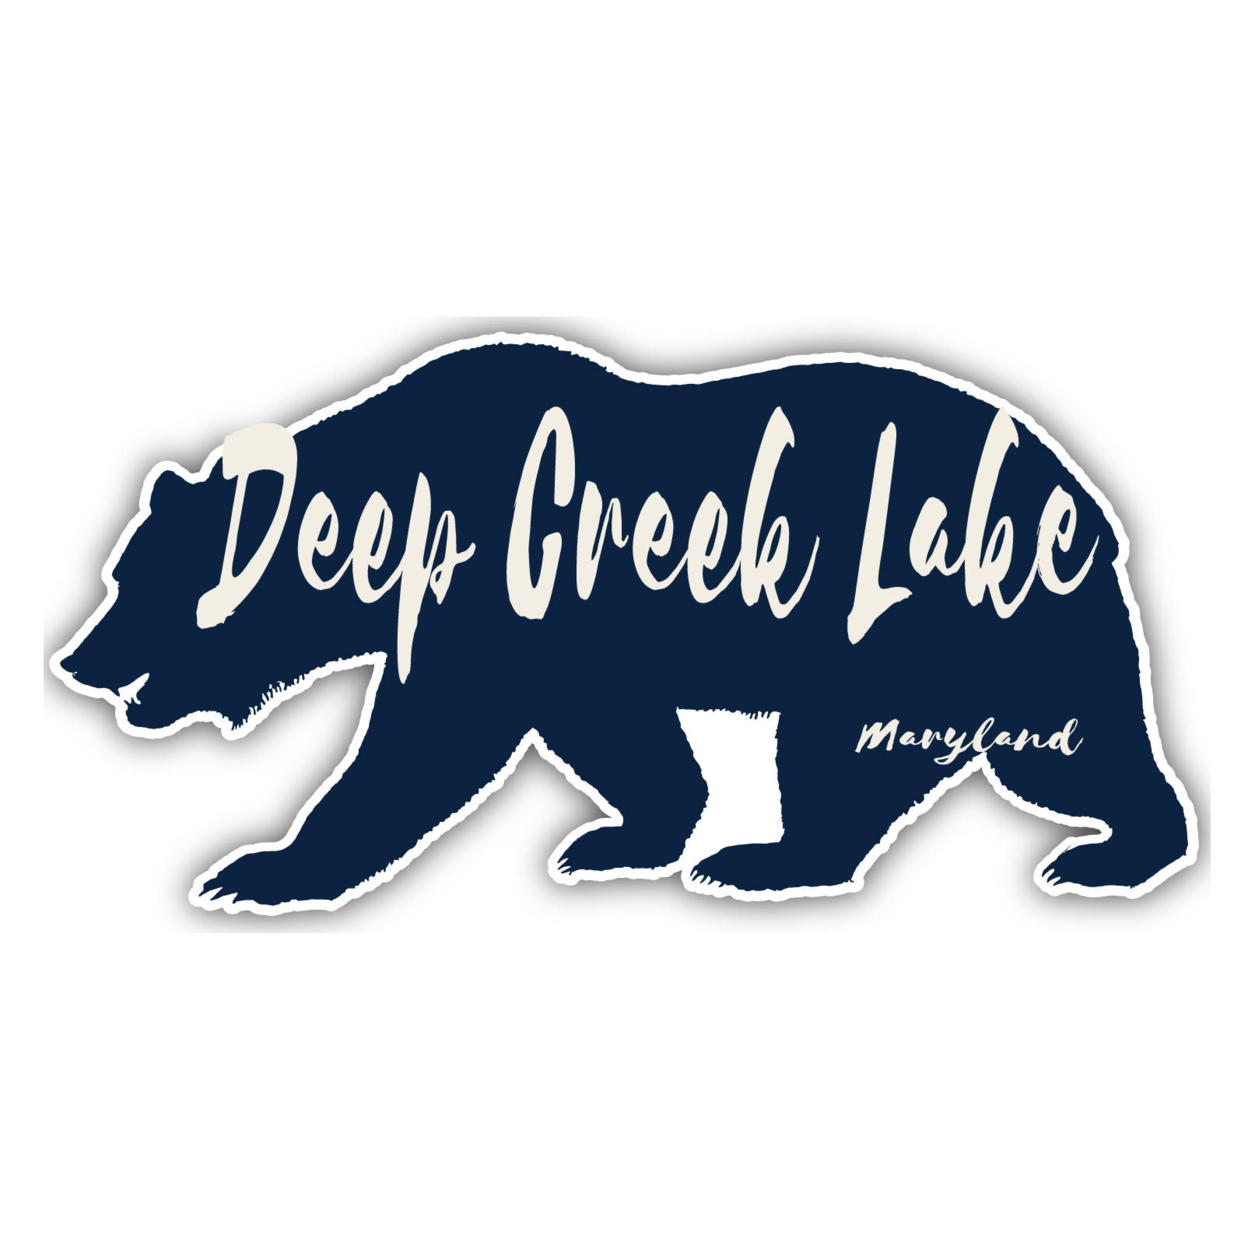 Deep Creek Lake Maryland Souvenir Decorative Stickers (Choose Theme And Size) - Single Unit, 12-Inch, Bear